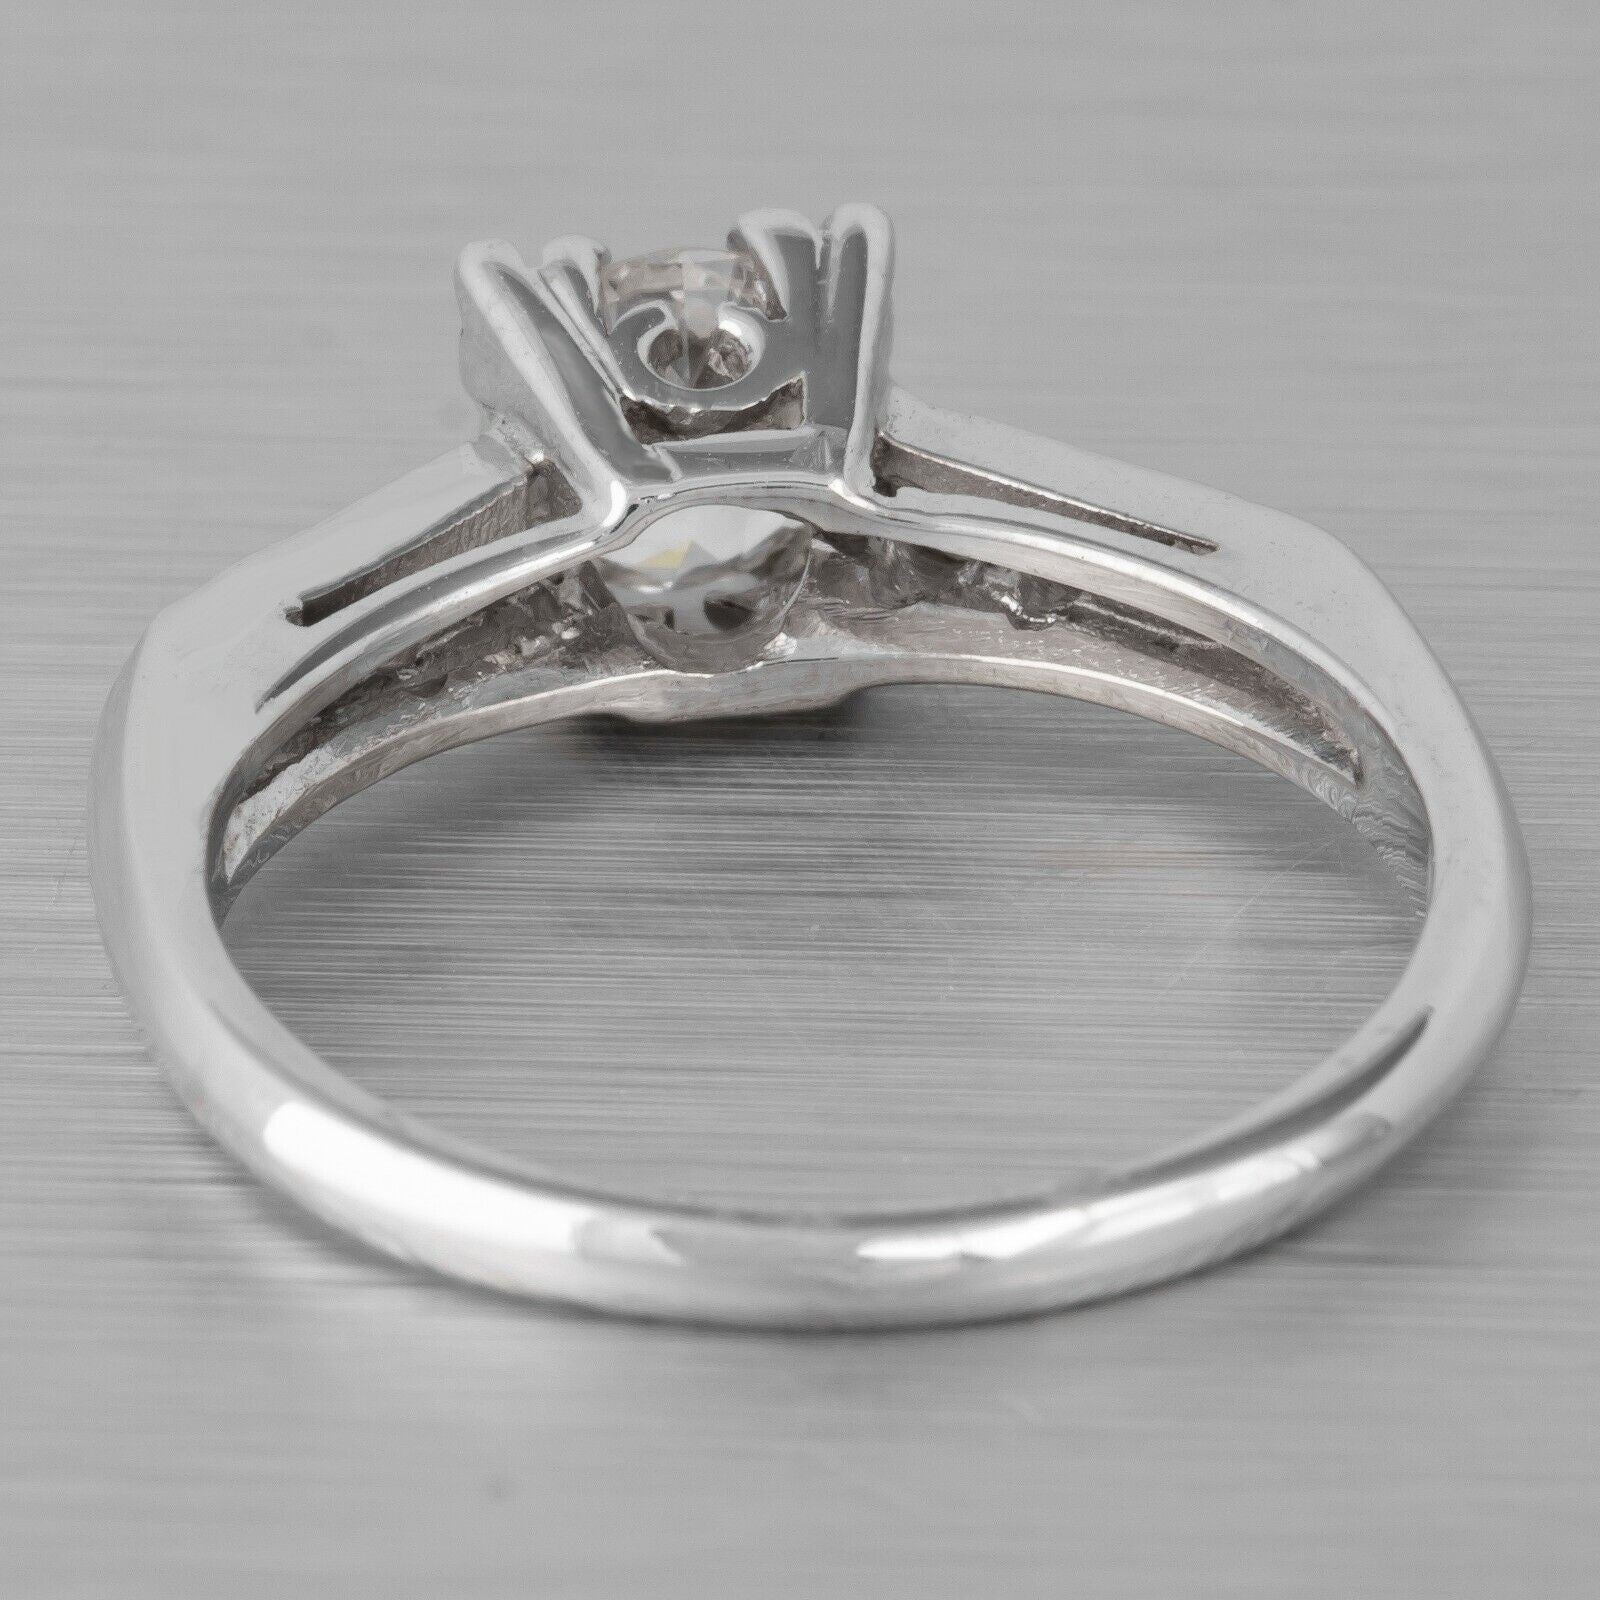 Antique Art Deco 14k White Gold Diamond Bridal Engagement Ring 0.85ctw